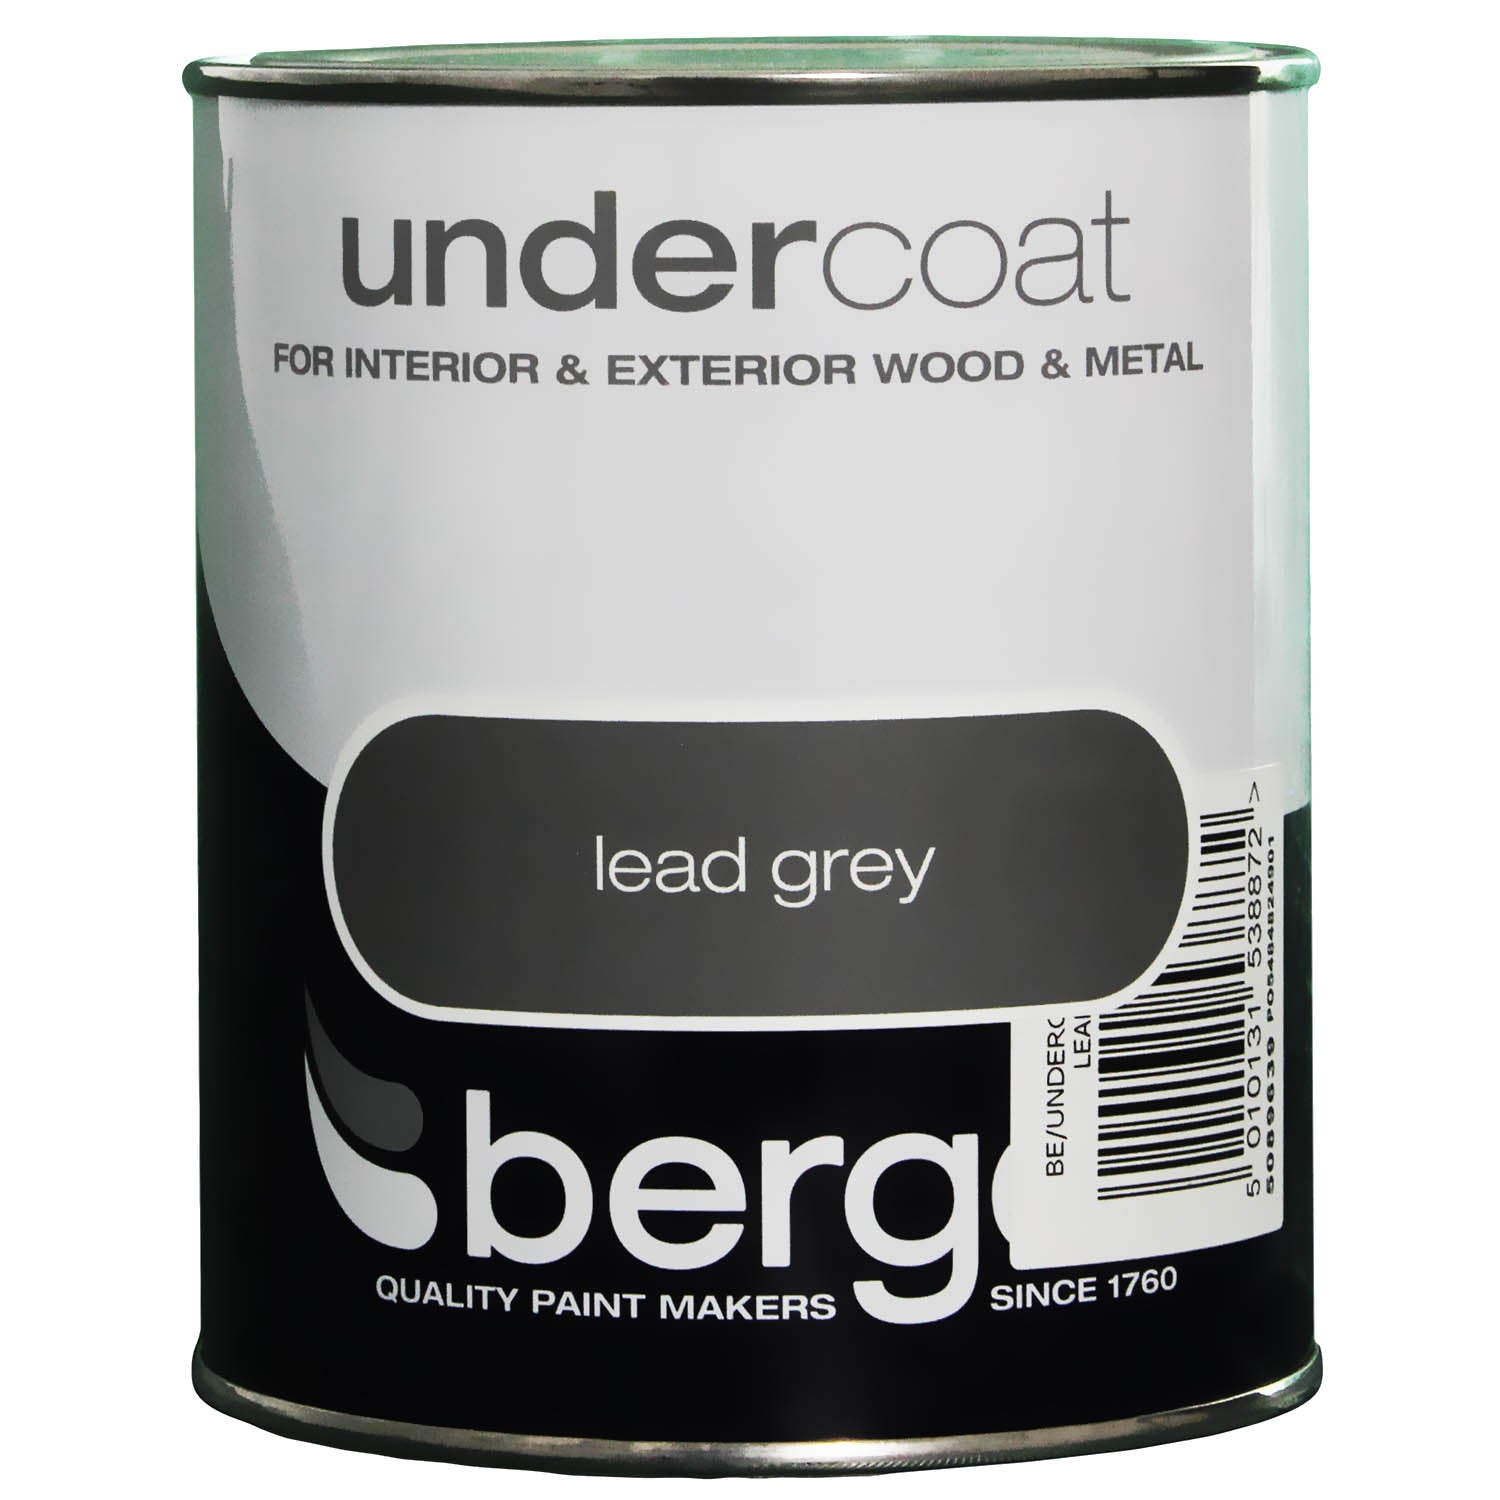 Berger Undercoat Lead Grey 750ml Interior Exterior Wood Metal Paint